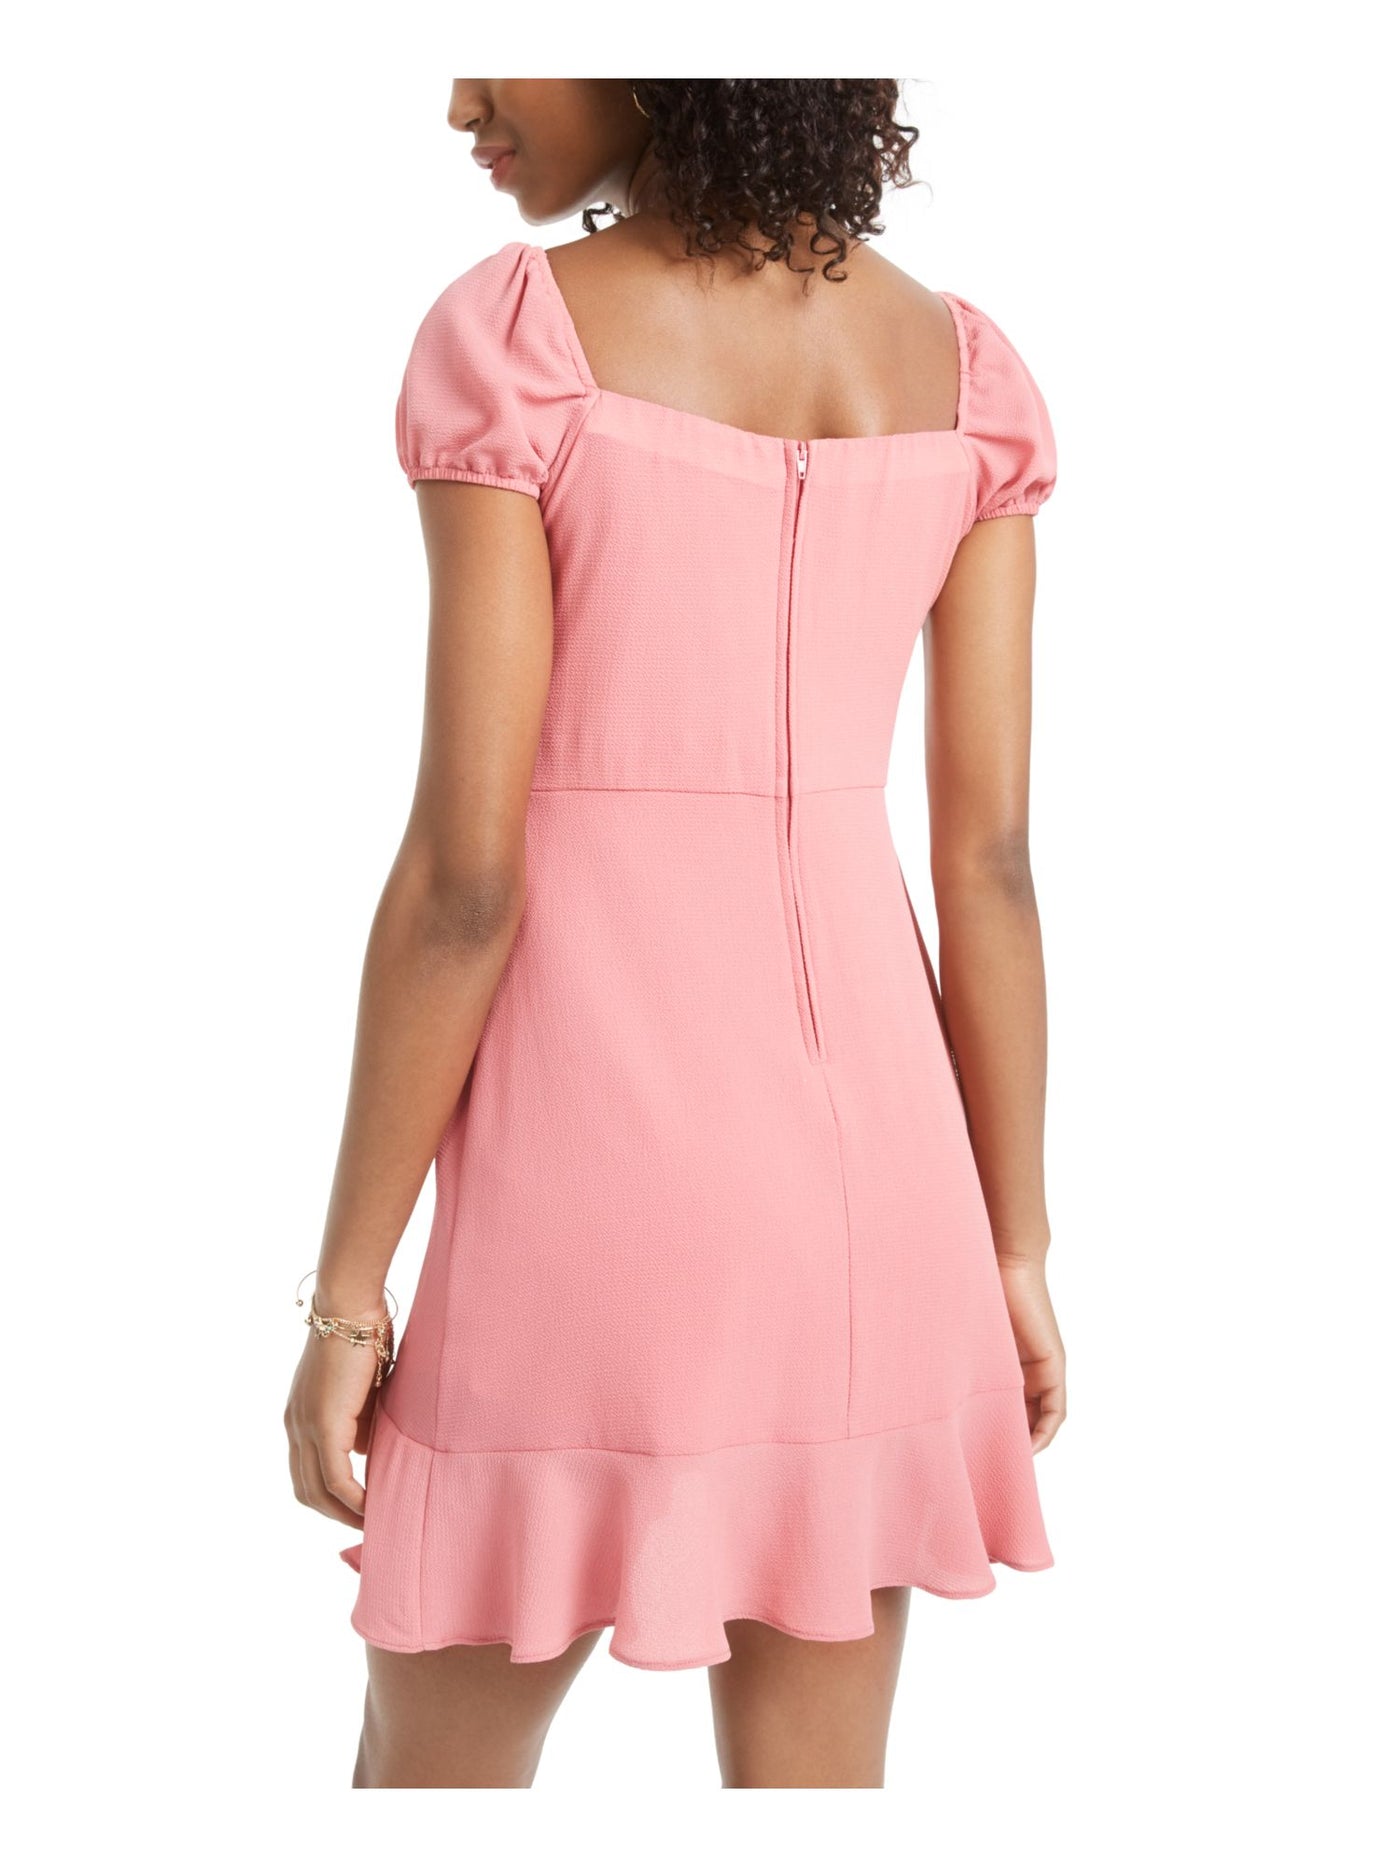 B DARLIN Womens Pink Cap Sleeve Square Neck Short Evening A-Line Dress Juniors 1\2